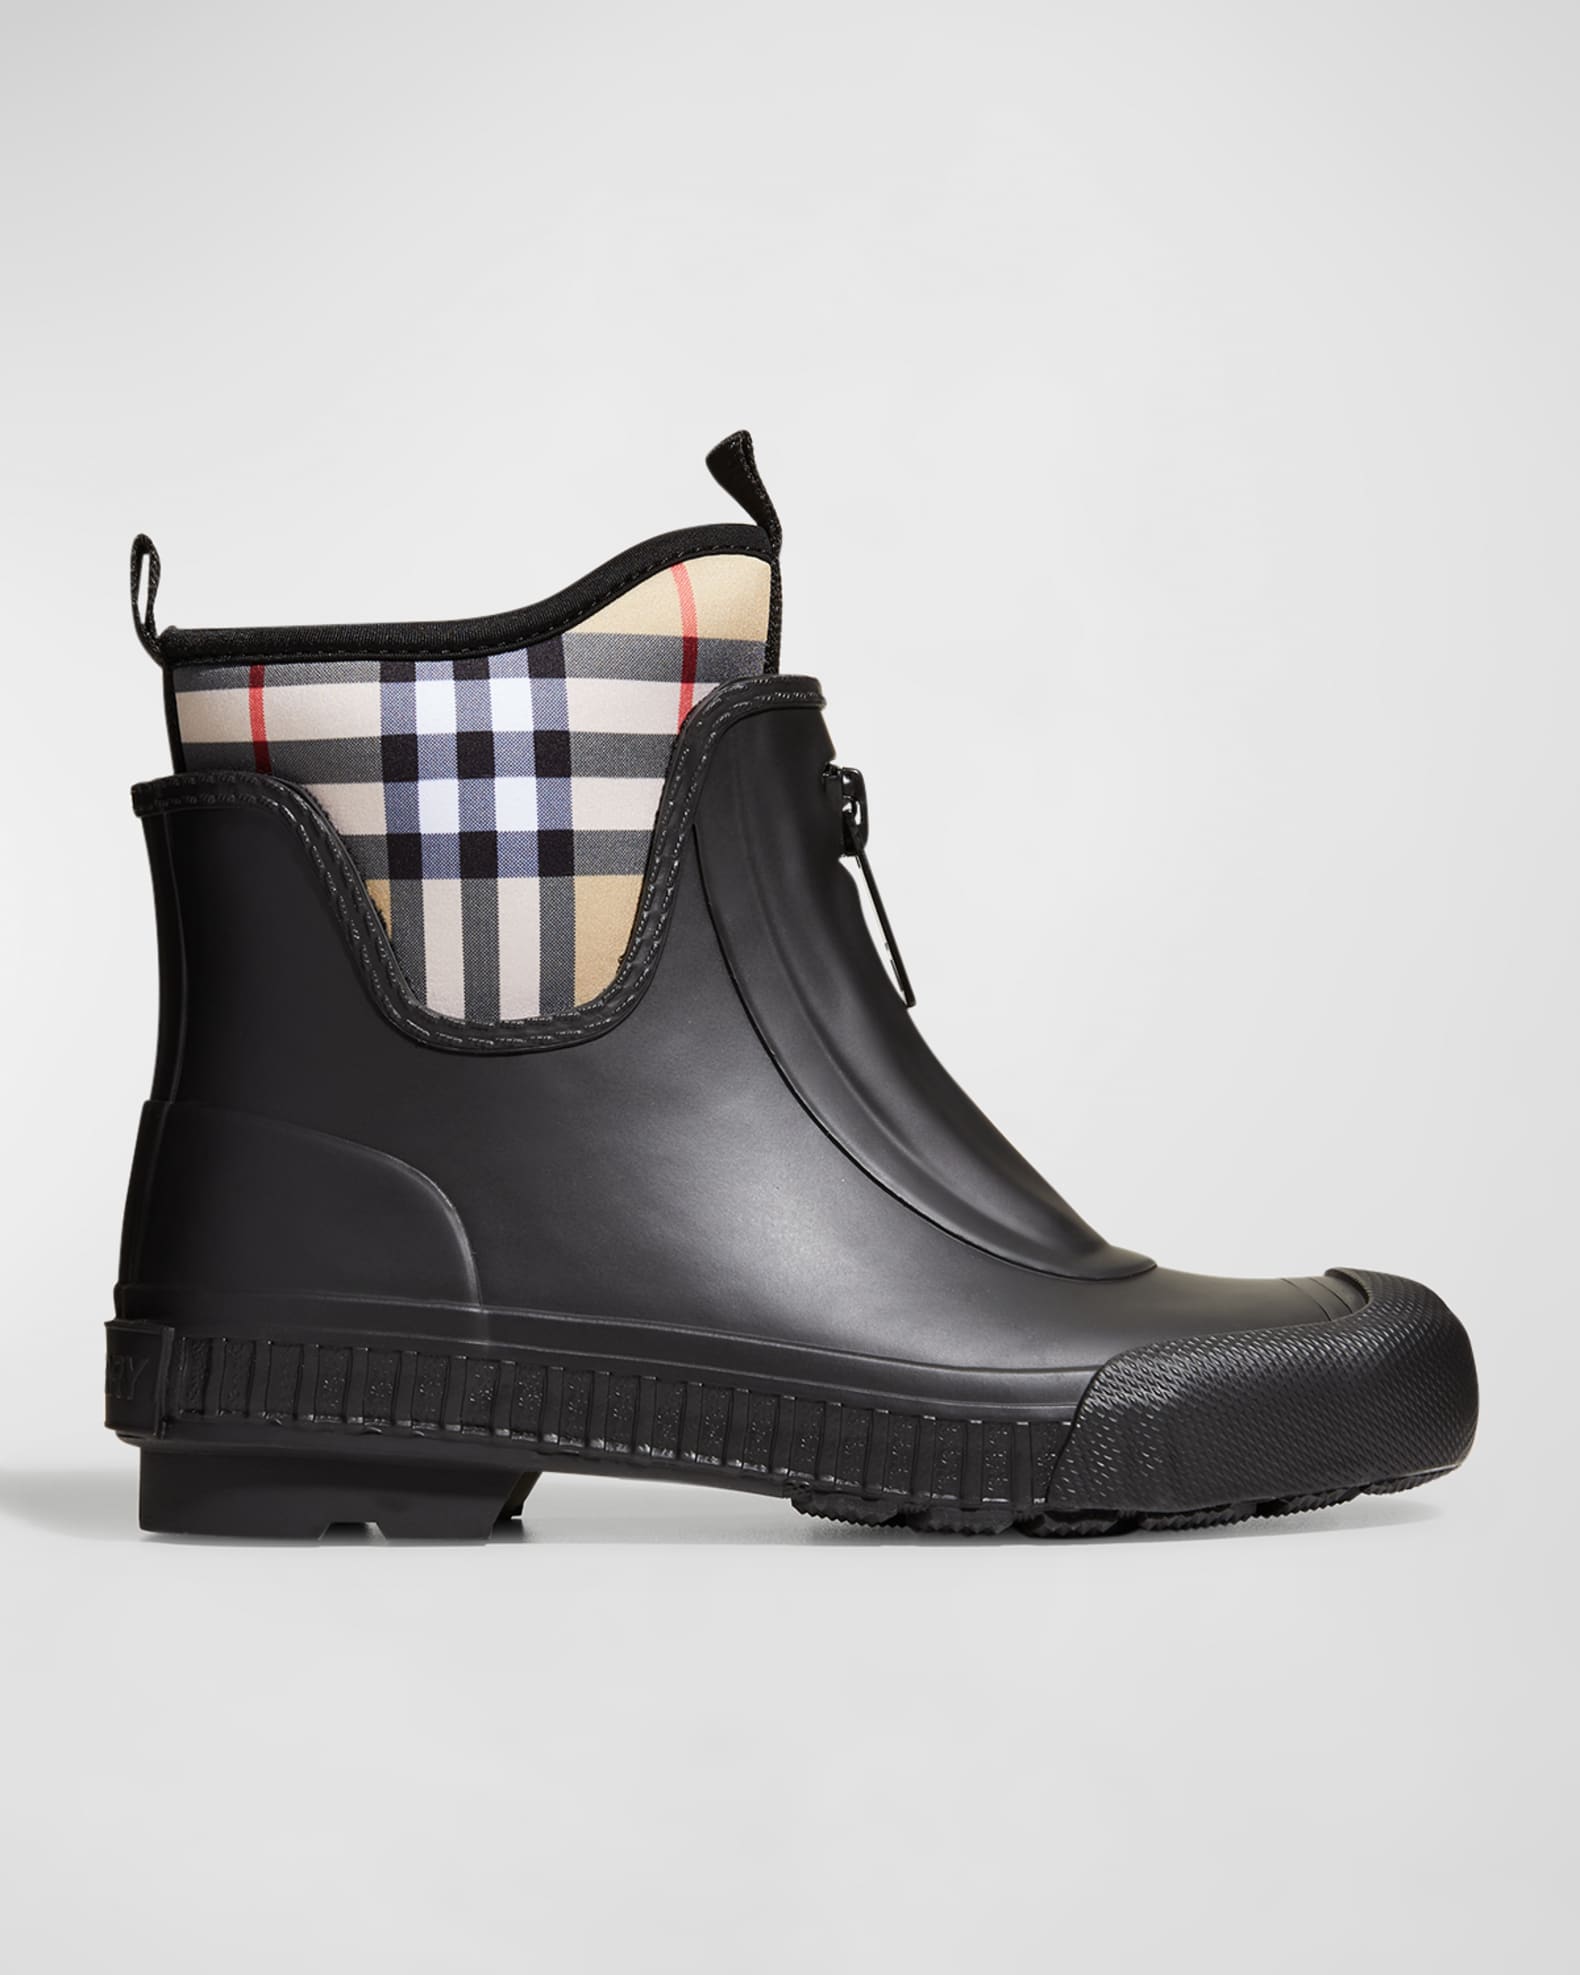 Stylish Monsoons: Flinton Check Waterproof Rain Boots by Burberry